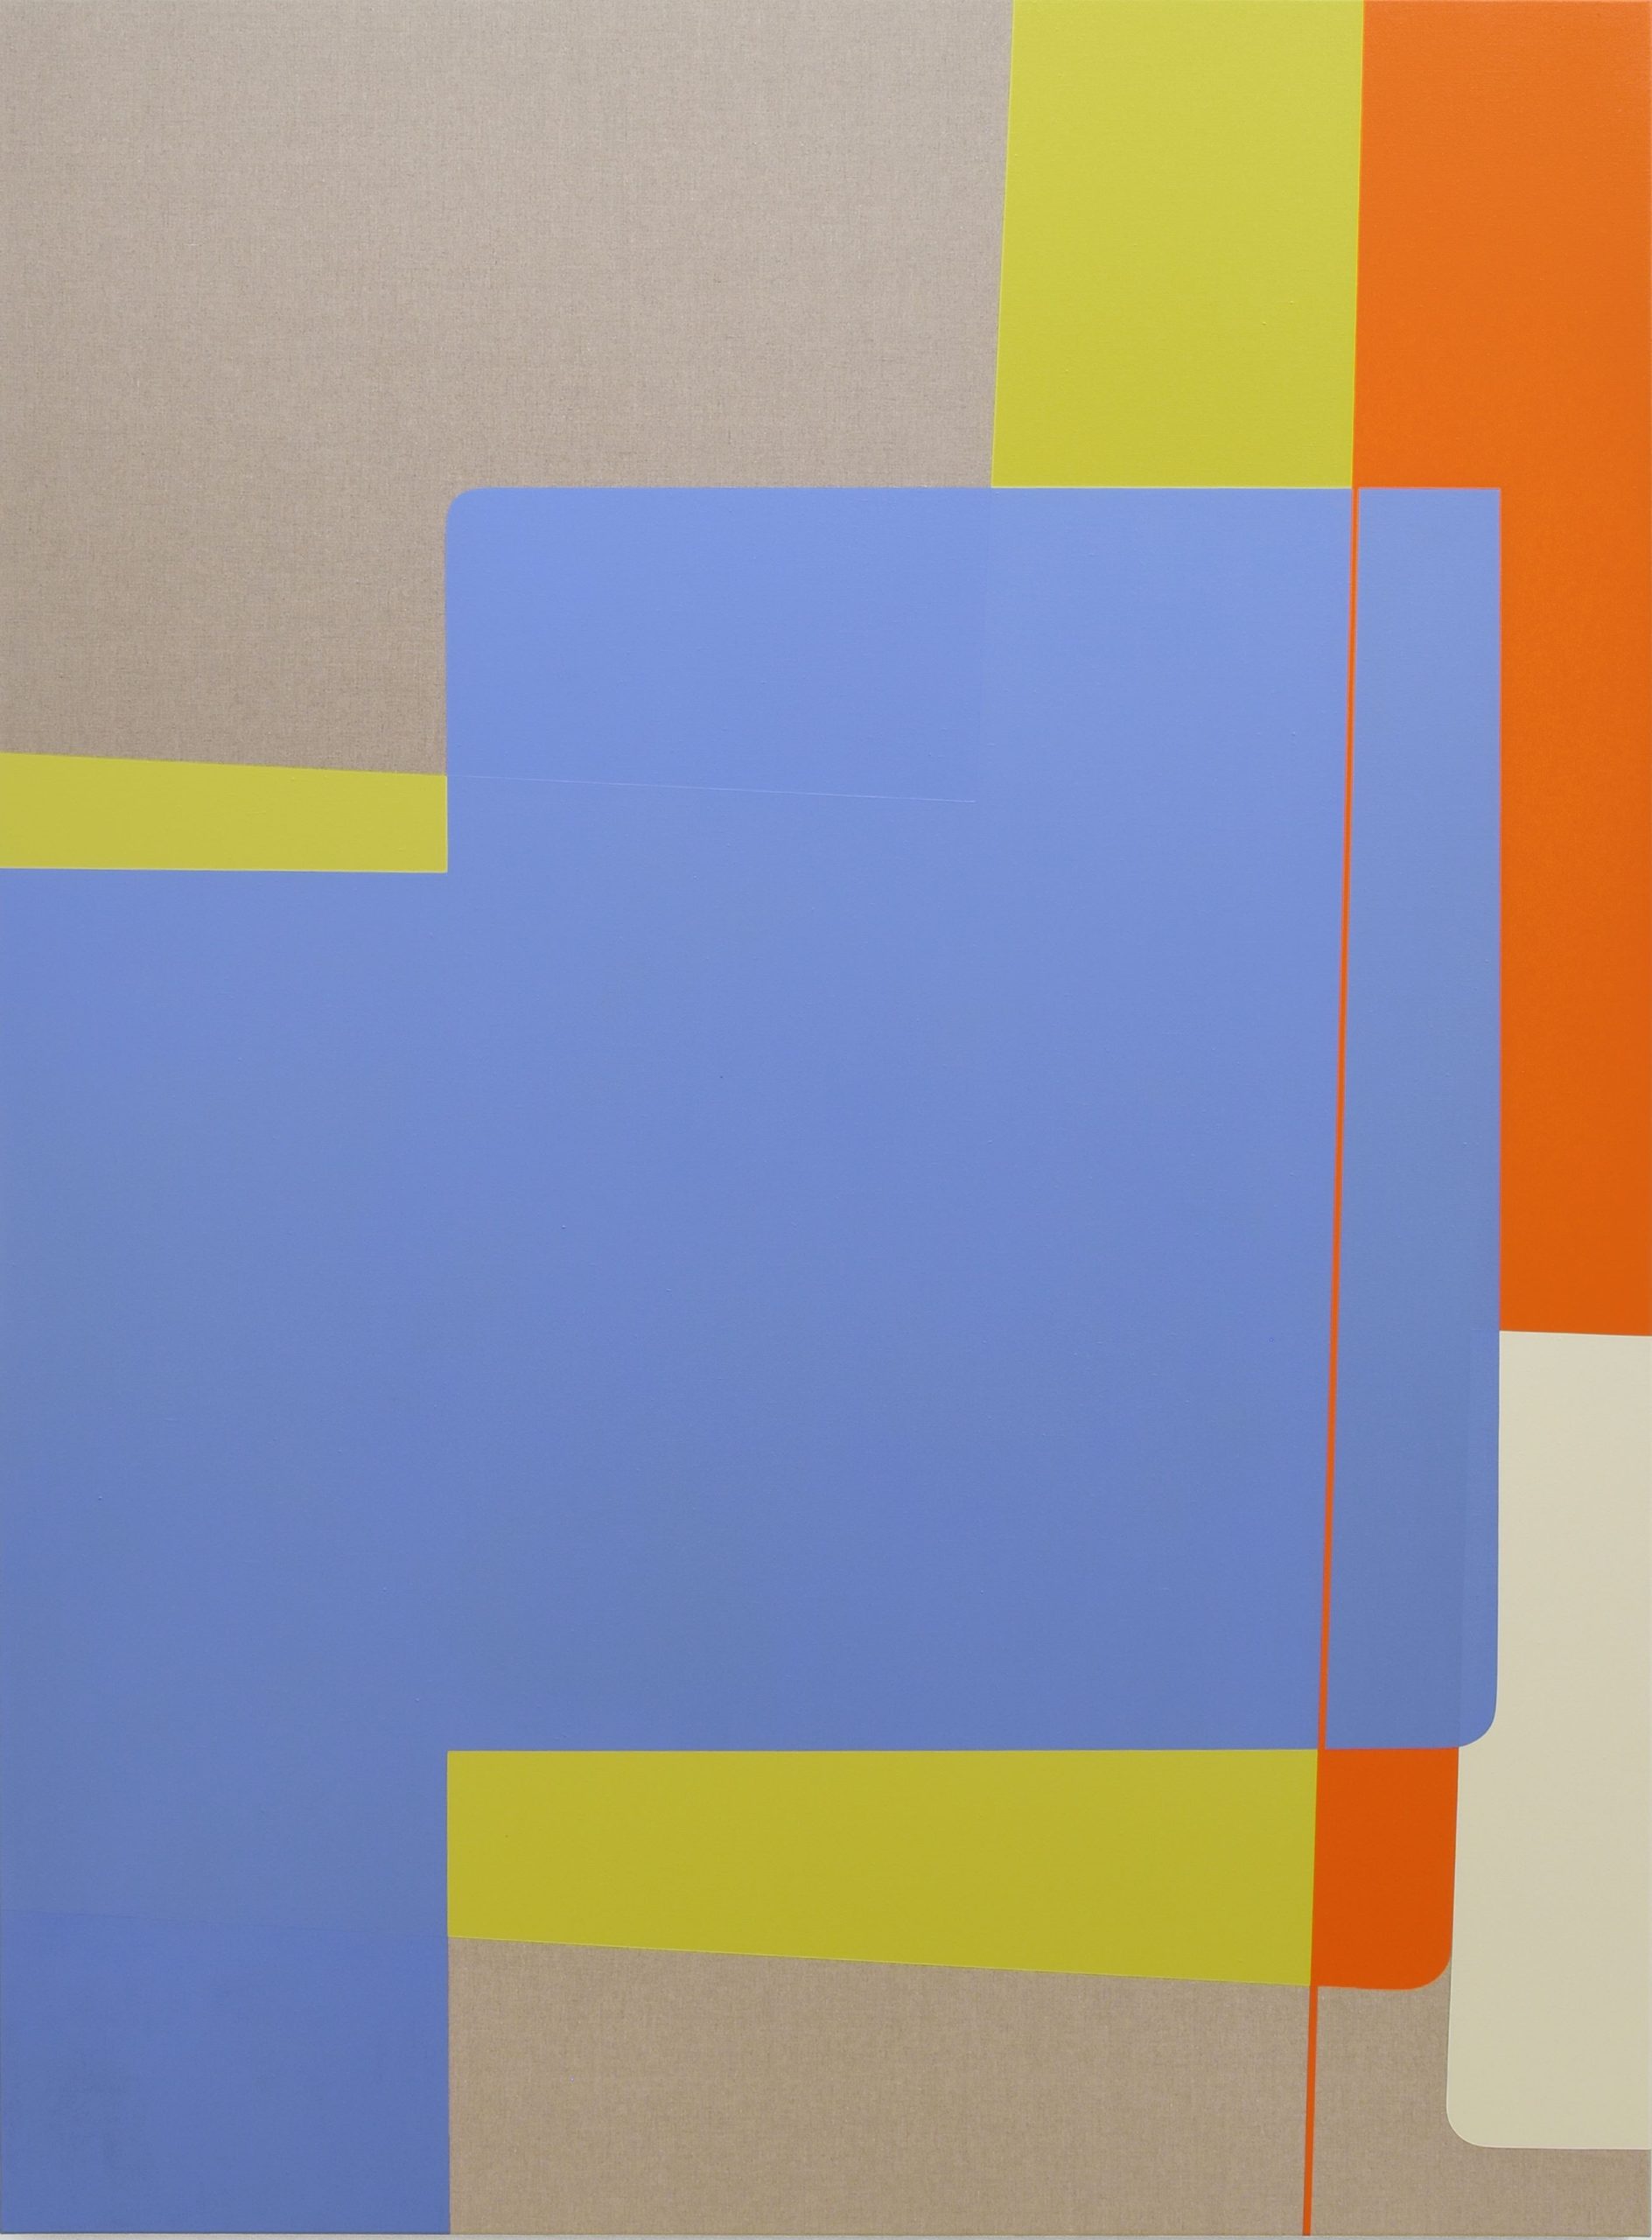 Matthew Browne 'Darnas' vinyl tempera and oil on linen 190 x 140cm $19,000